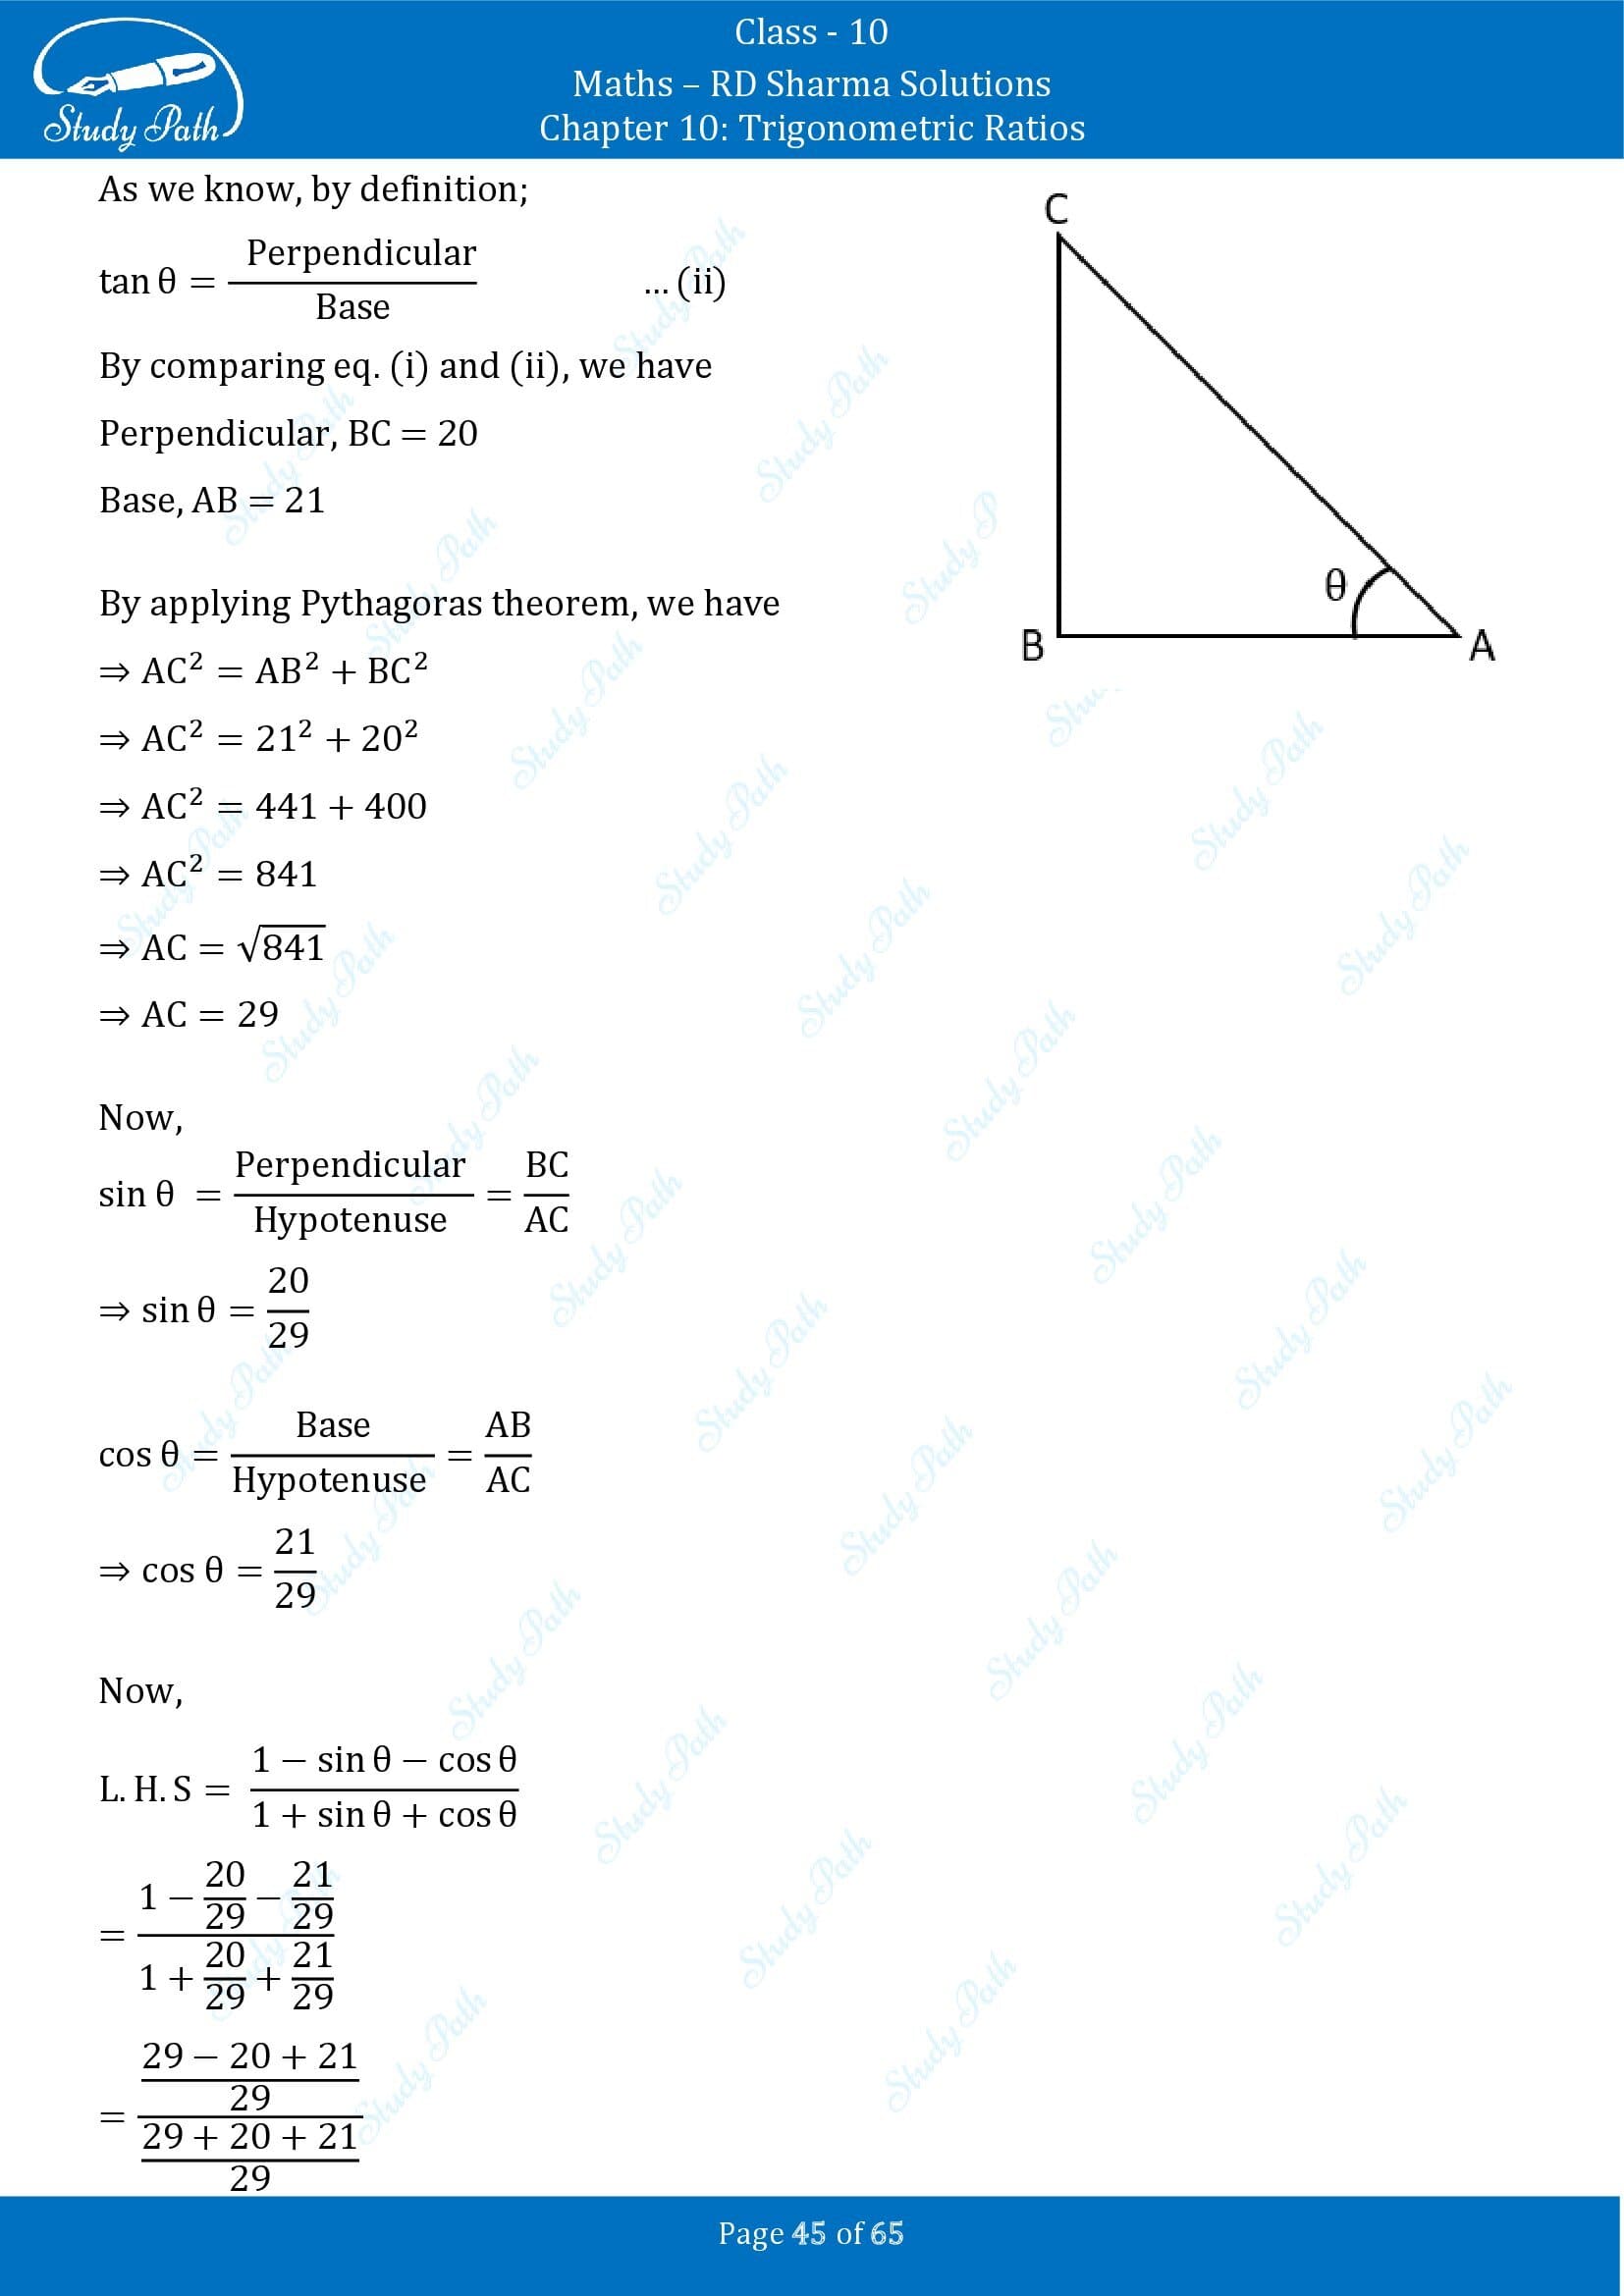 RD Sharma Solutions Class 10 Chapter 10 Trigonometric Ratios Exercise 10.1 00045